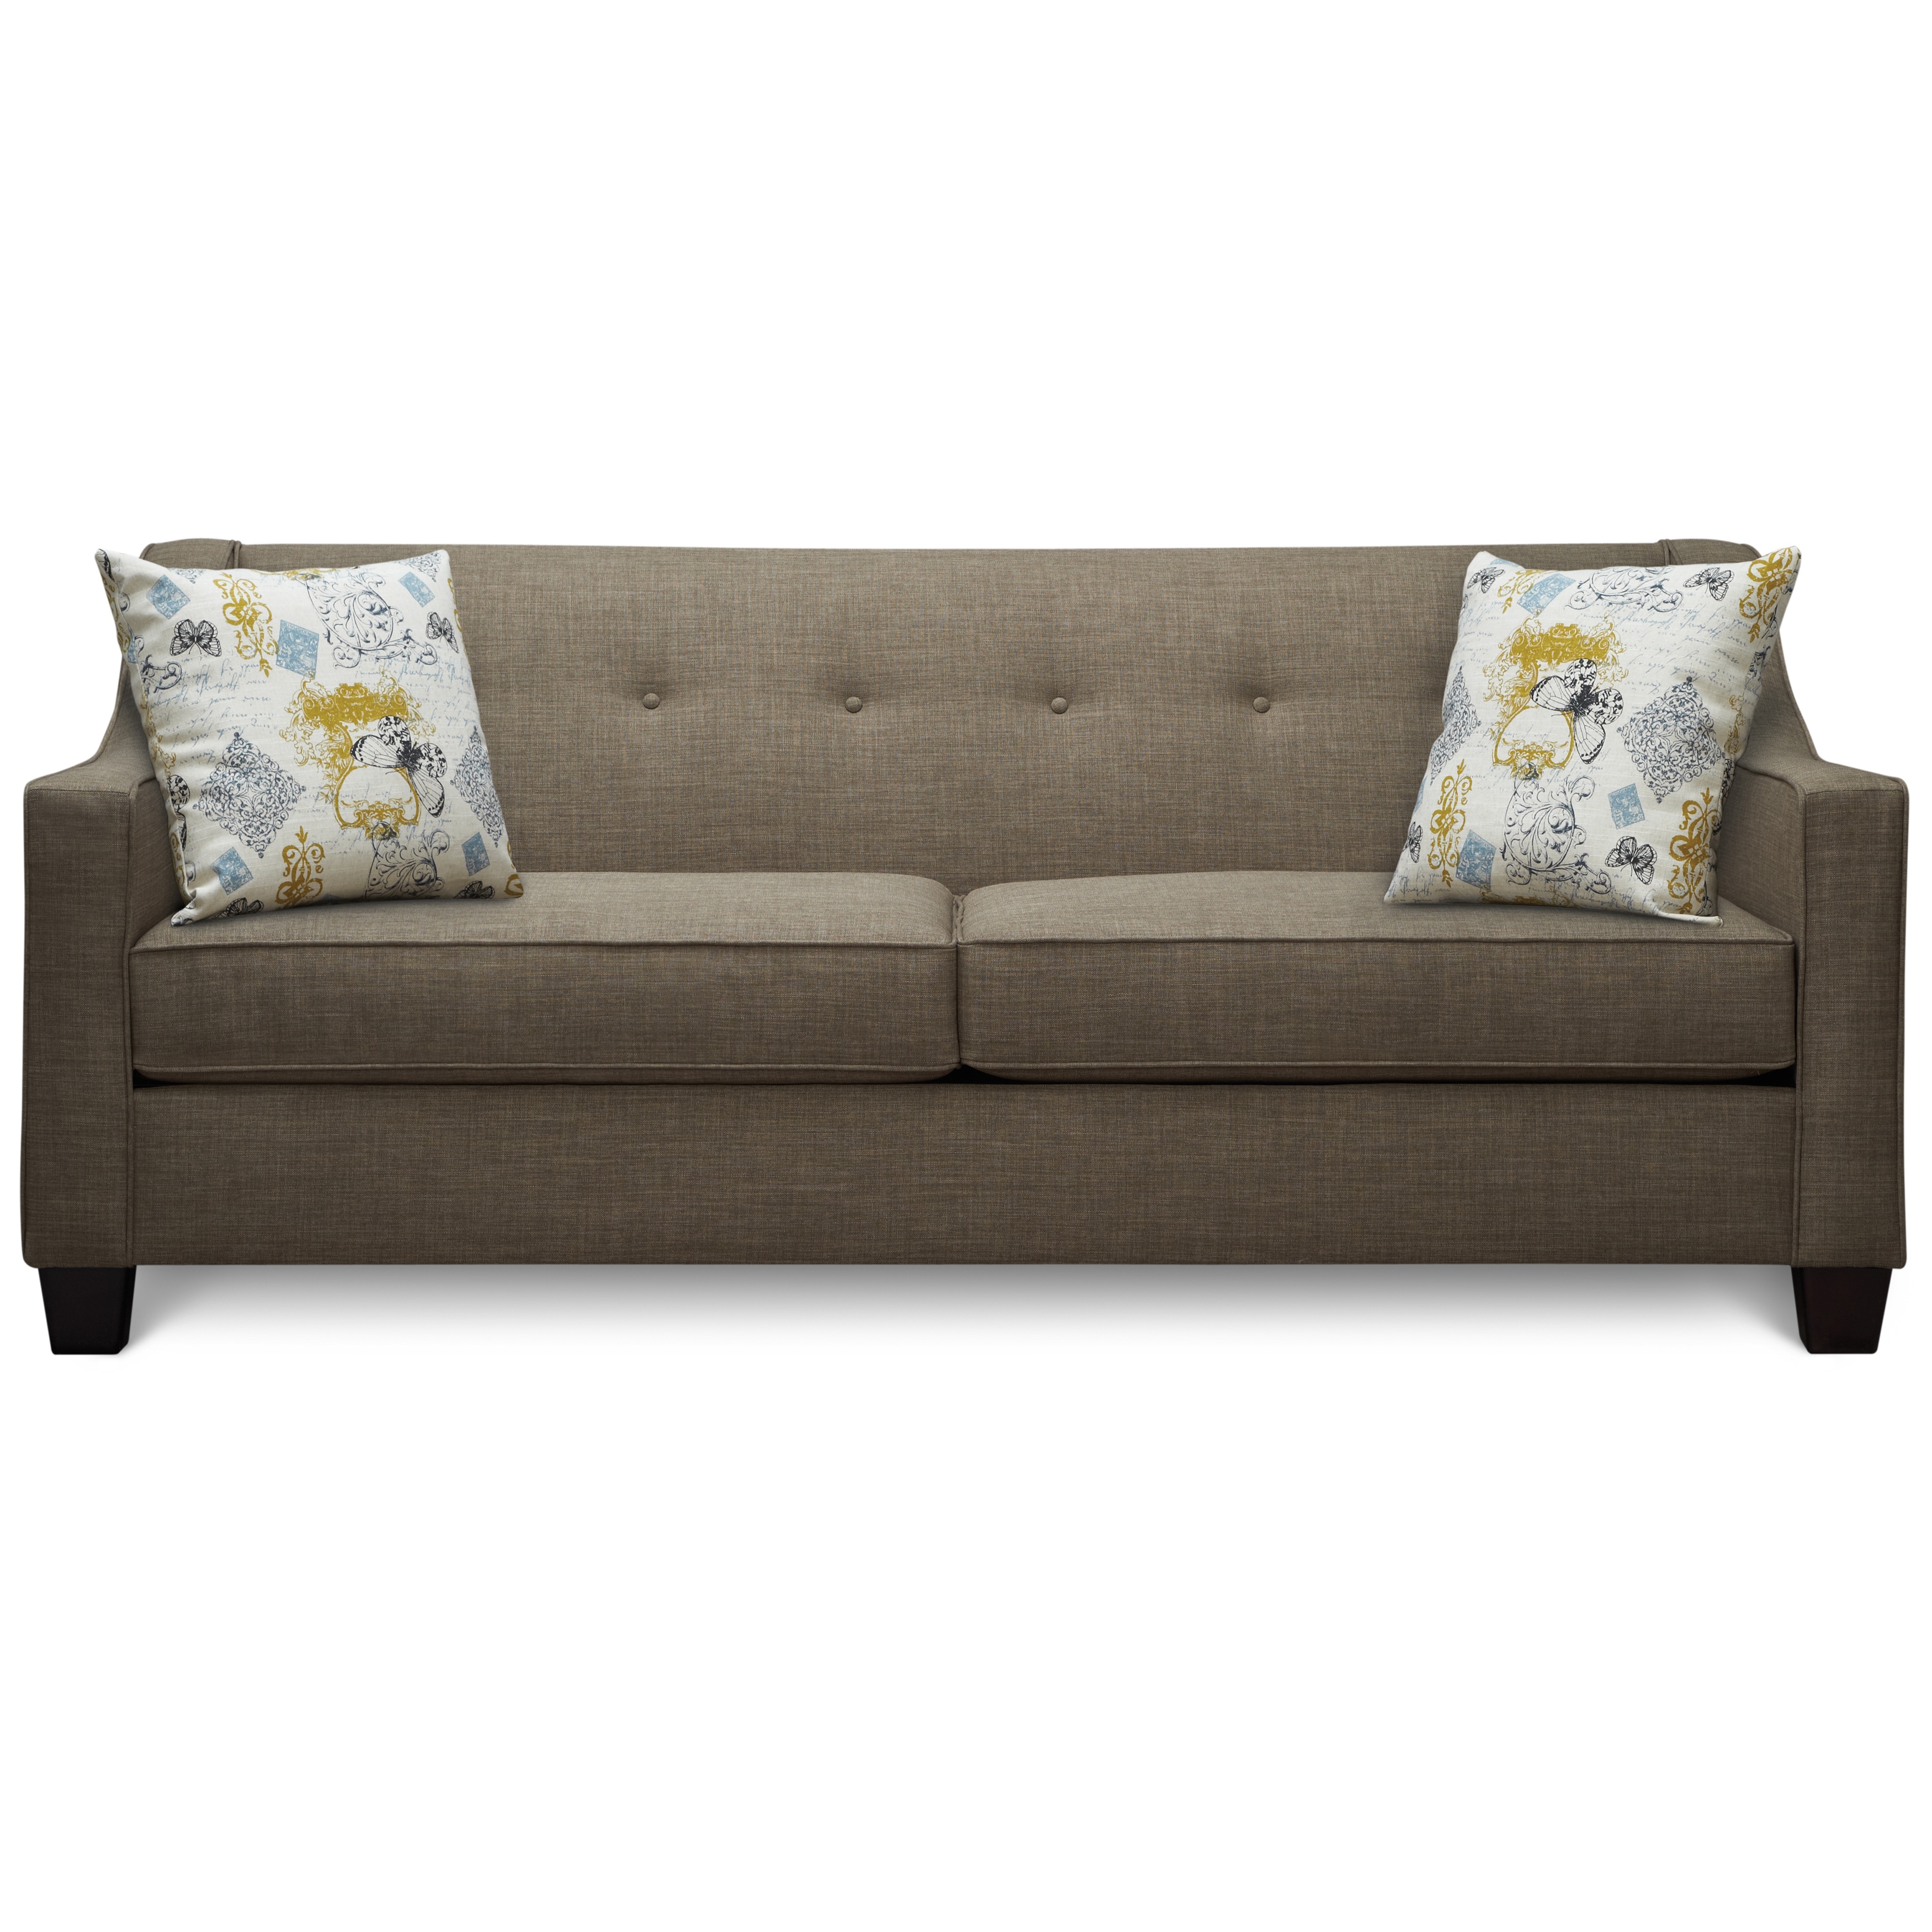 Art Van Axis Stone Sofa - Overstock™ Shopping - Great Deals on Art Van Furniture Sofas & Loveseats